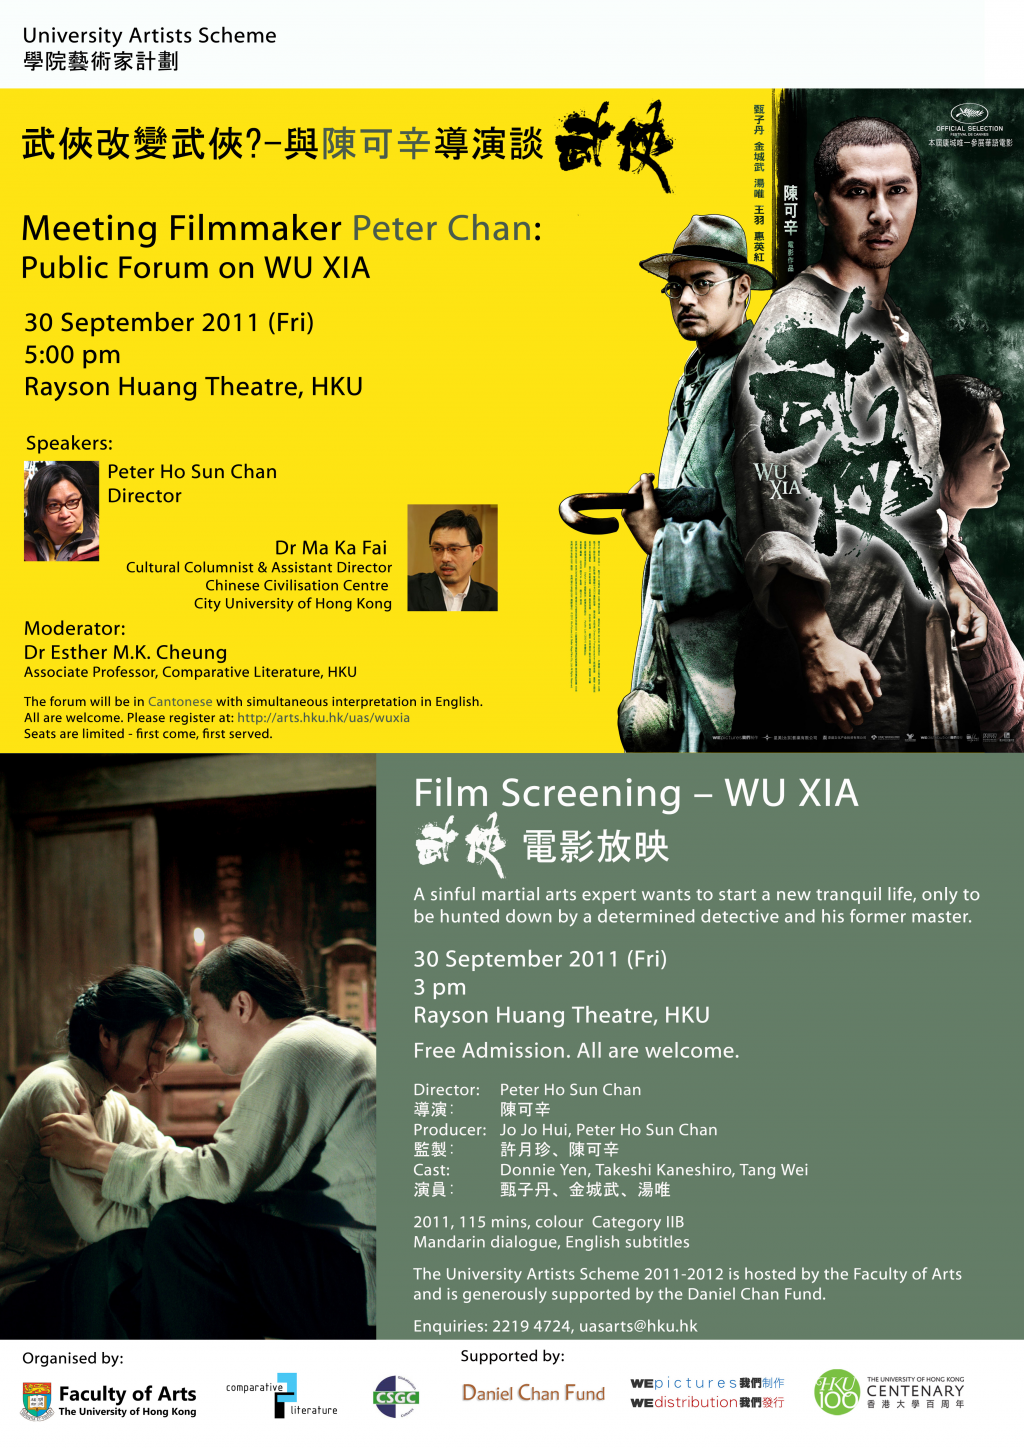 Meeting Filmmaker Peter Chan: Public Forum on Wu Xia 